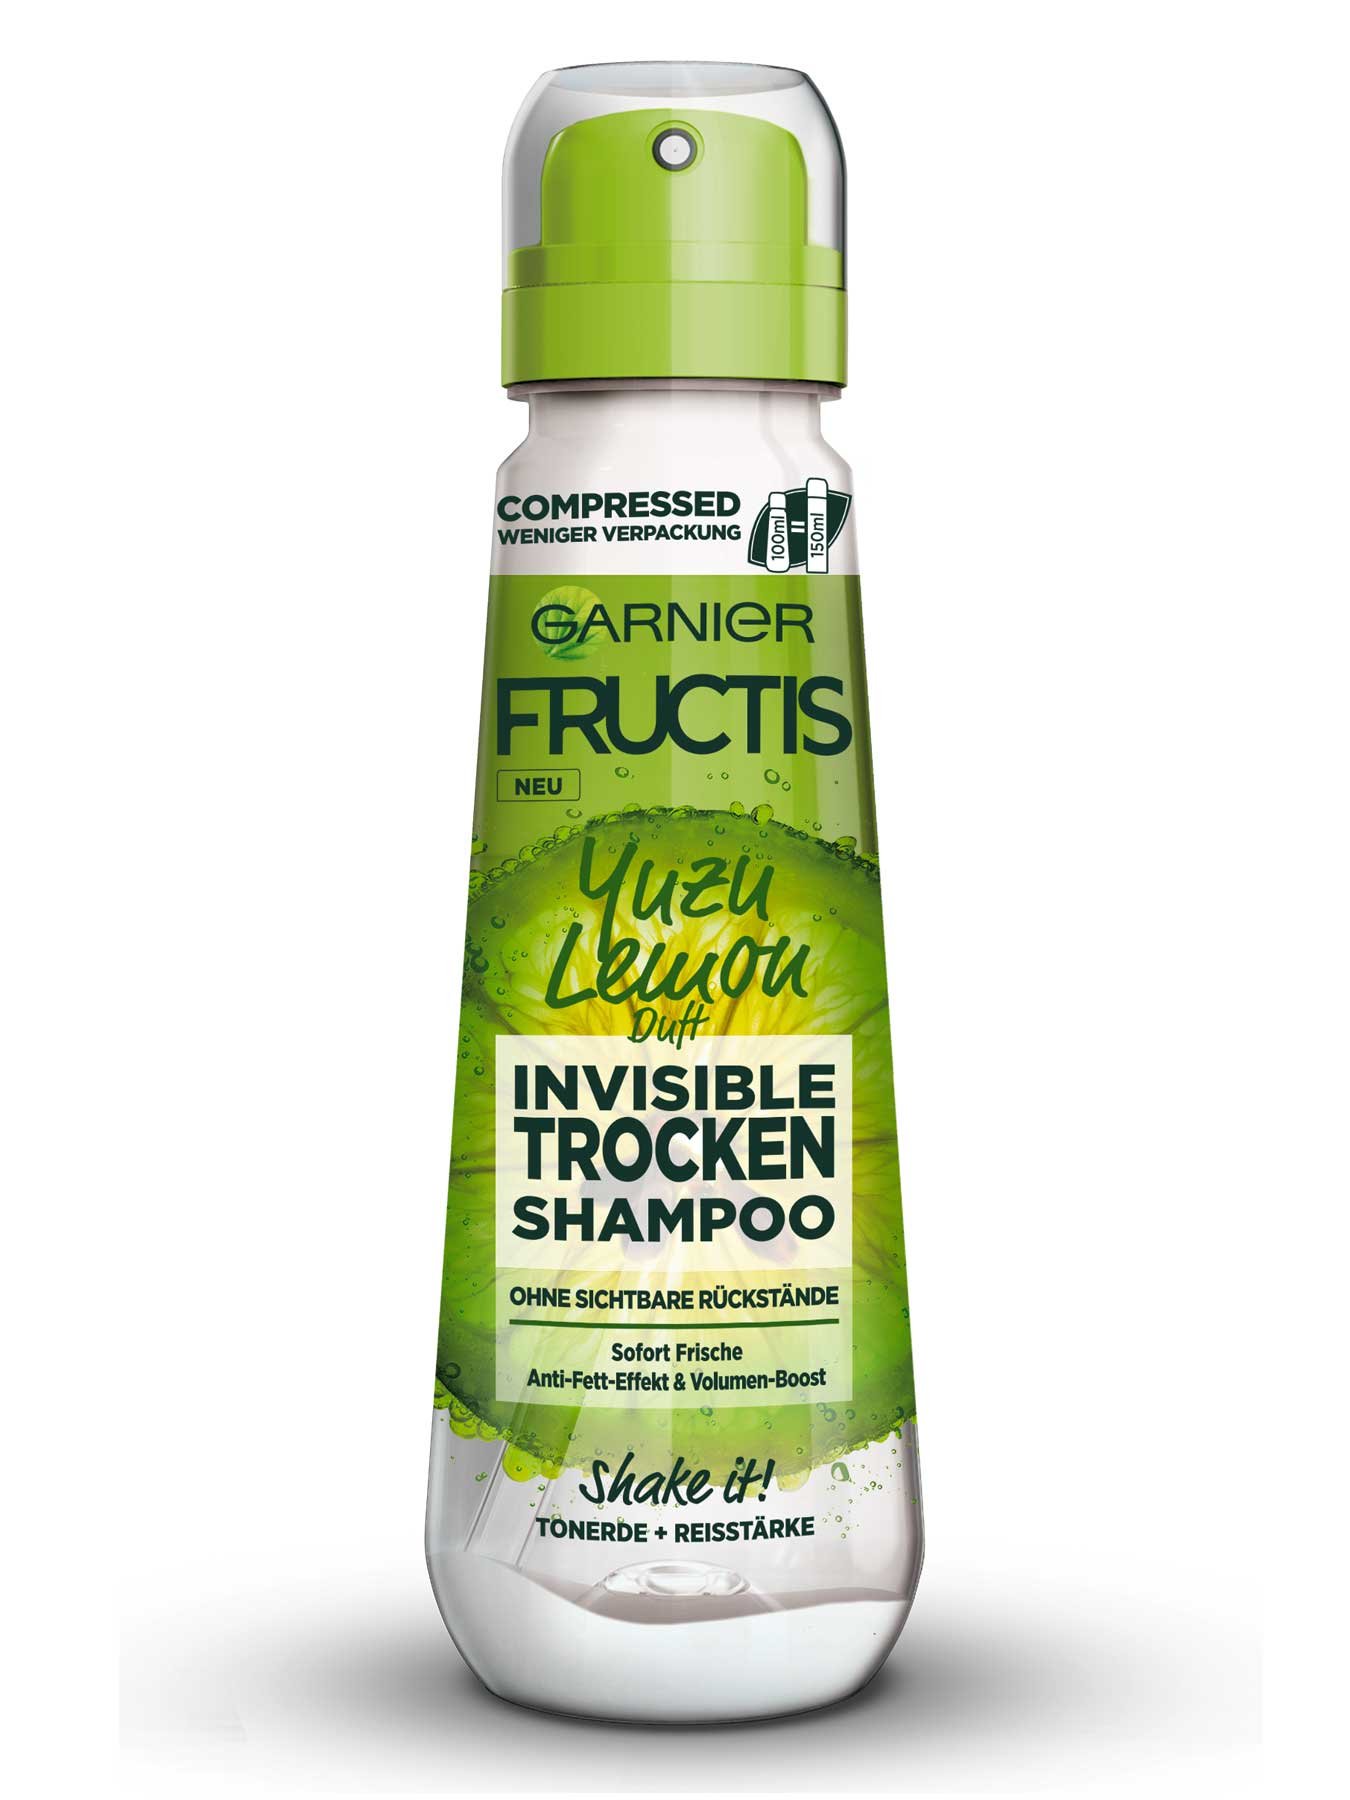 Fructis Invisible Trockenshampoo Yuzu Lemon - Produktansicht